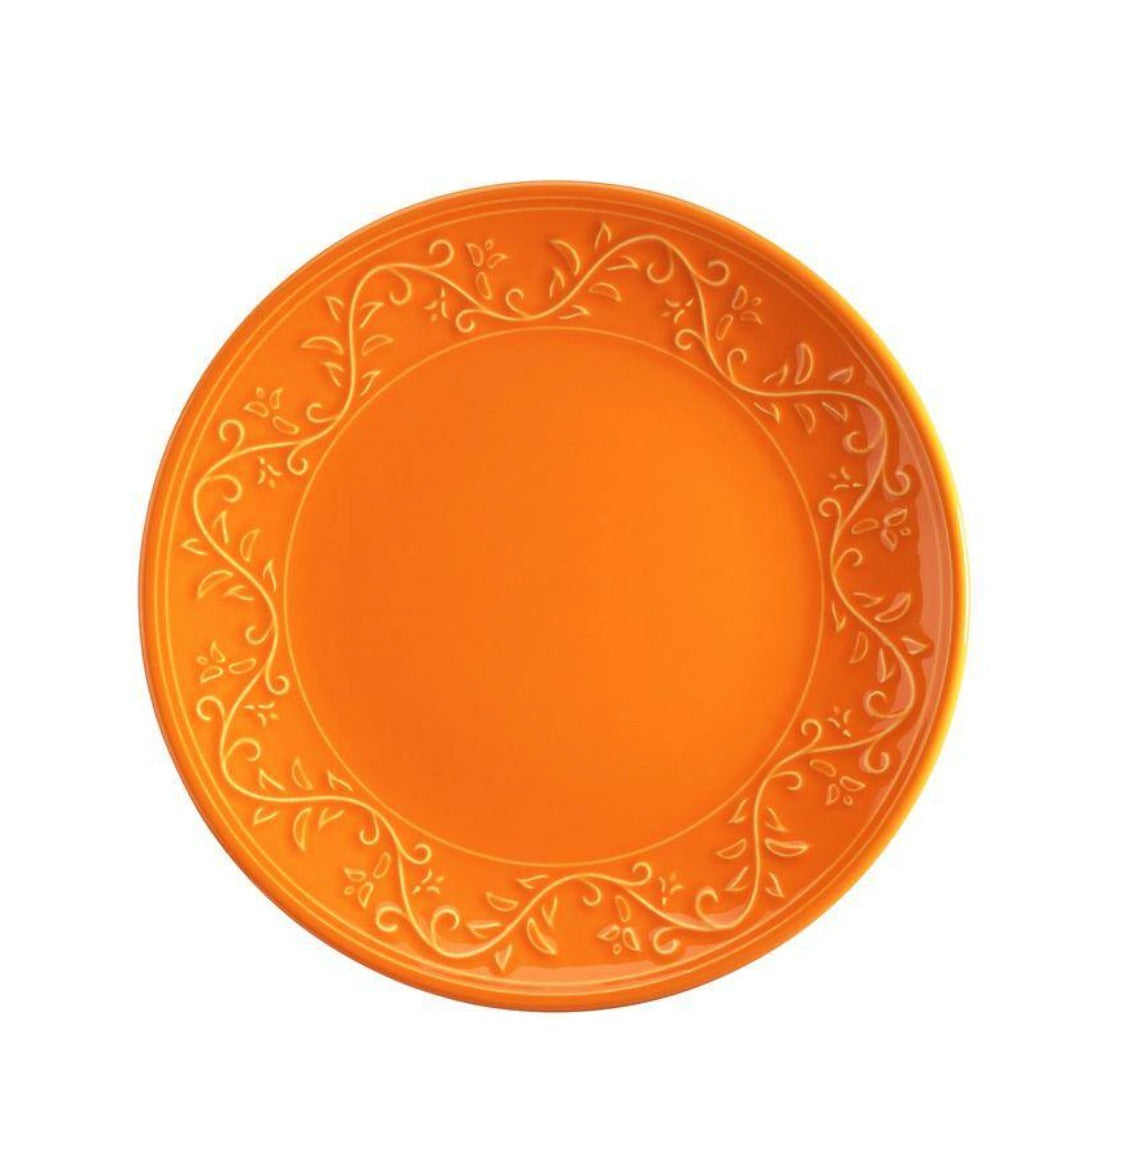 Fulya 16 Pieces Dinnerware Set orange-porcelain